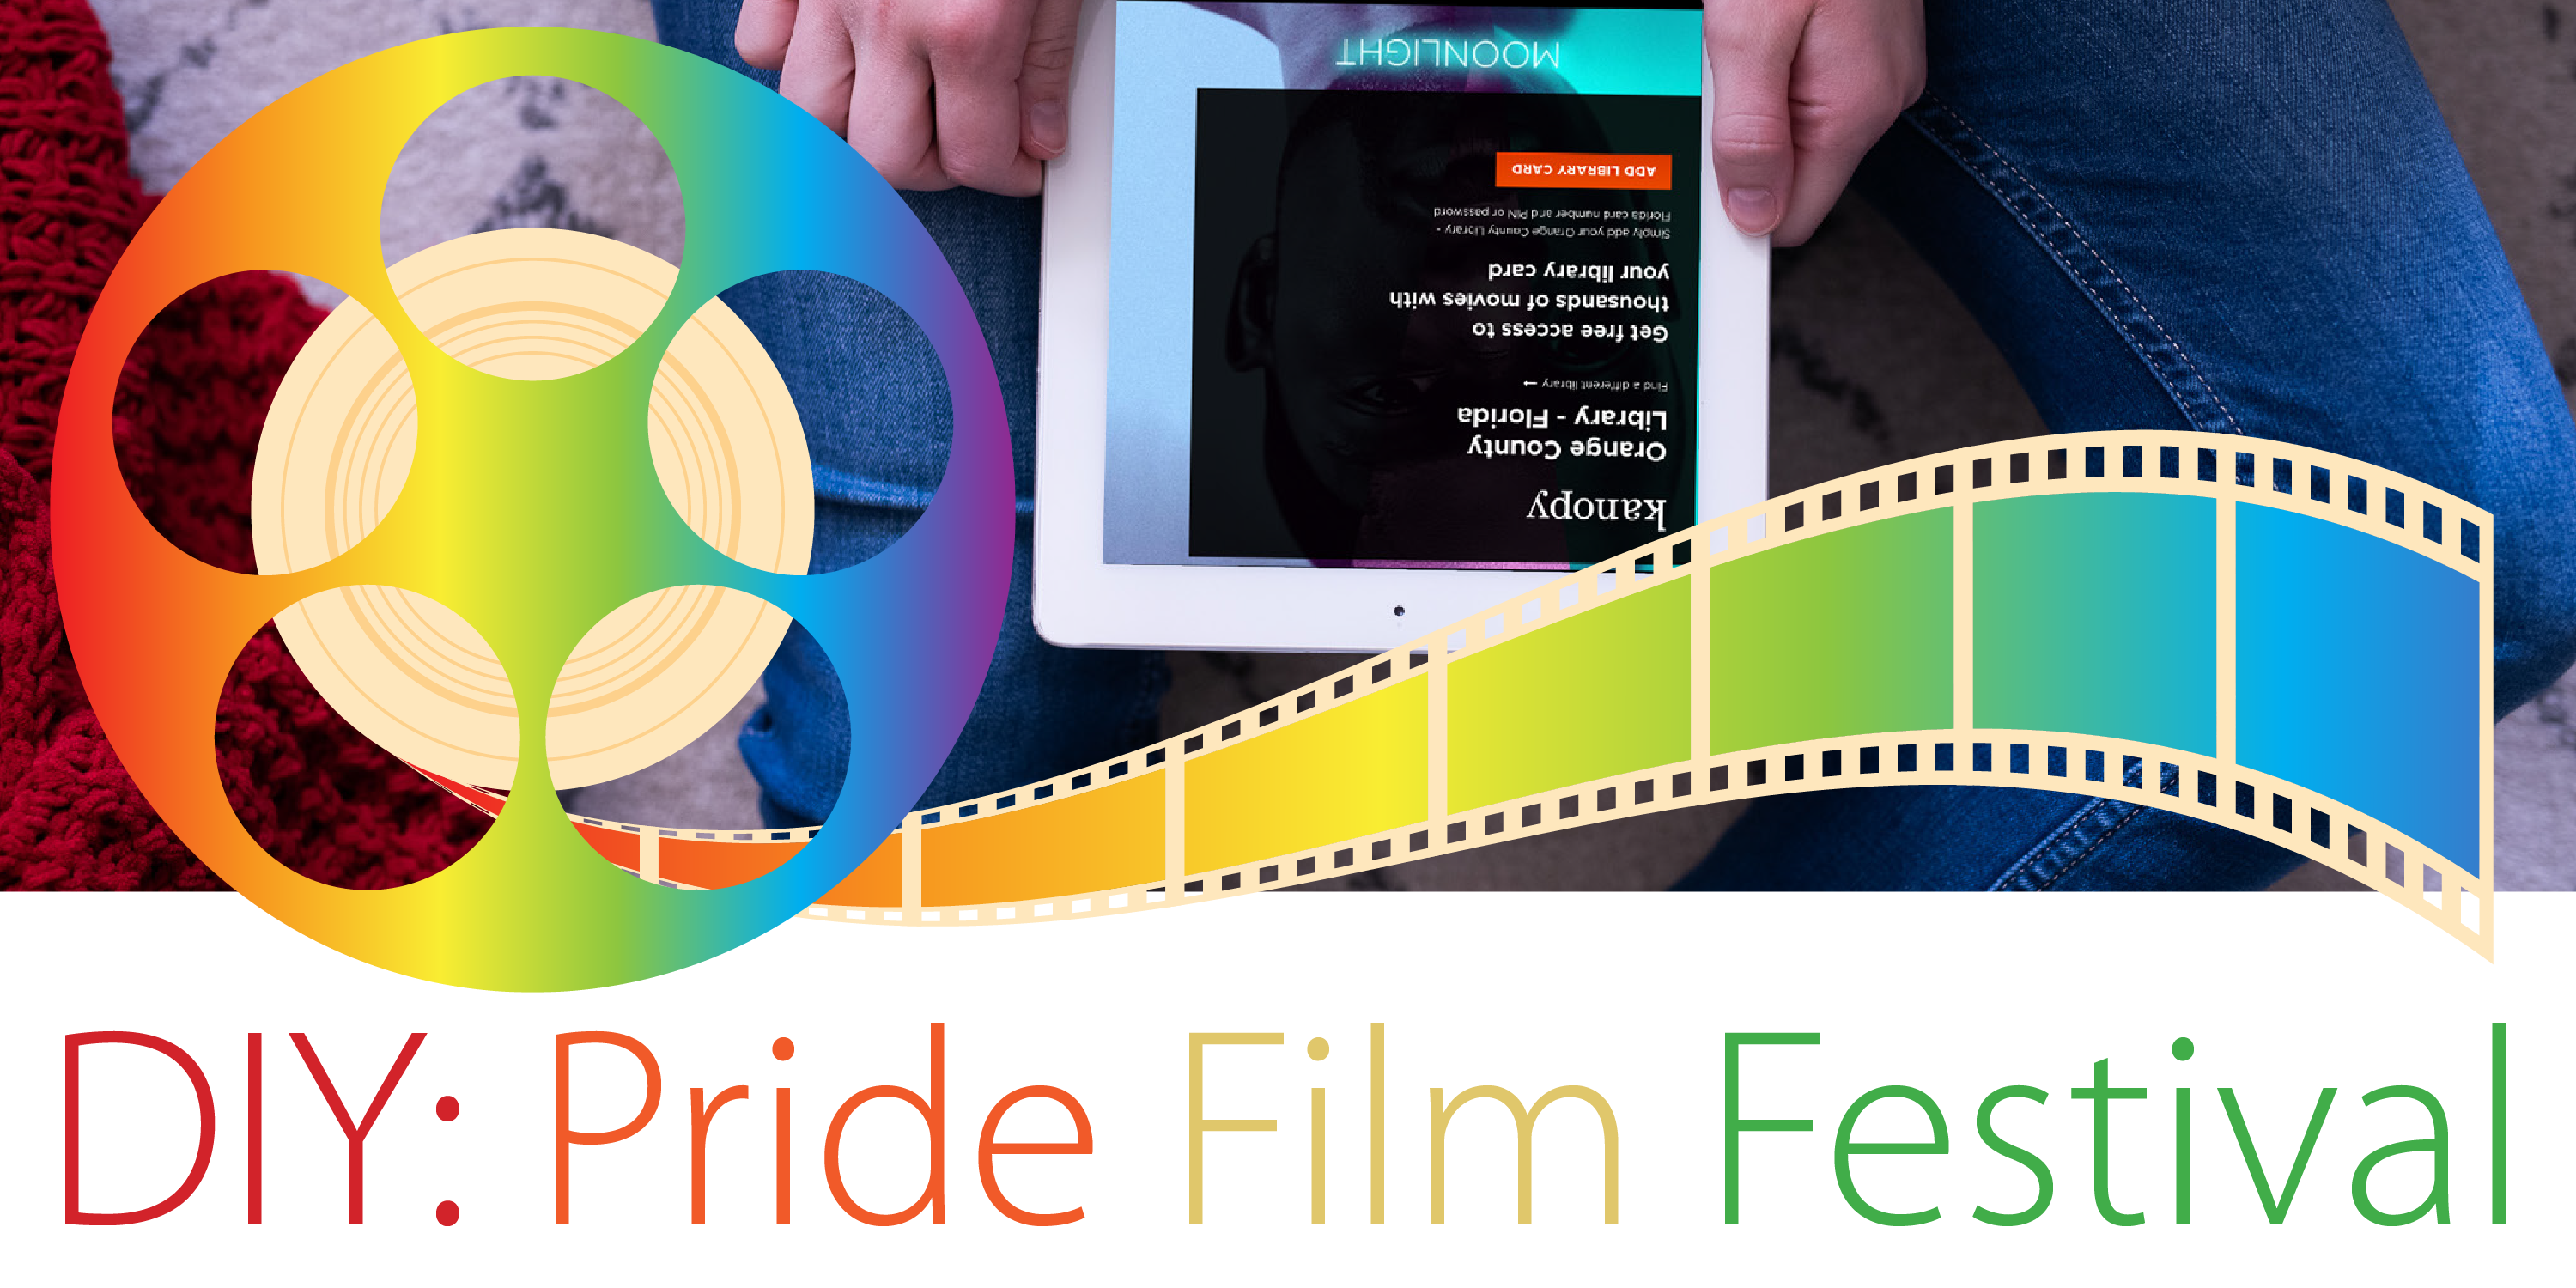 DIY: Pride Film Festival